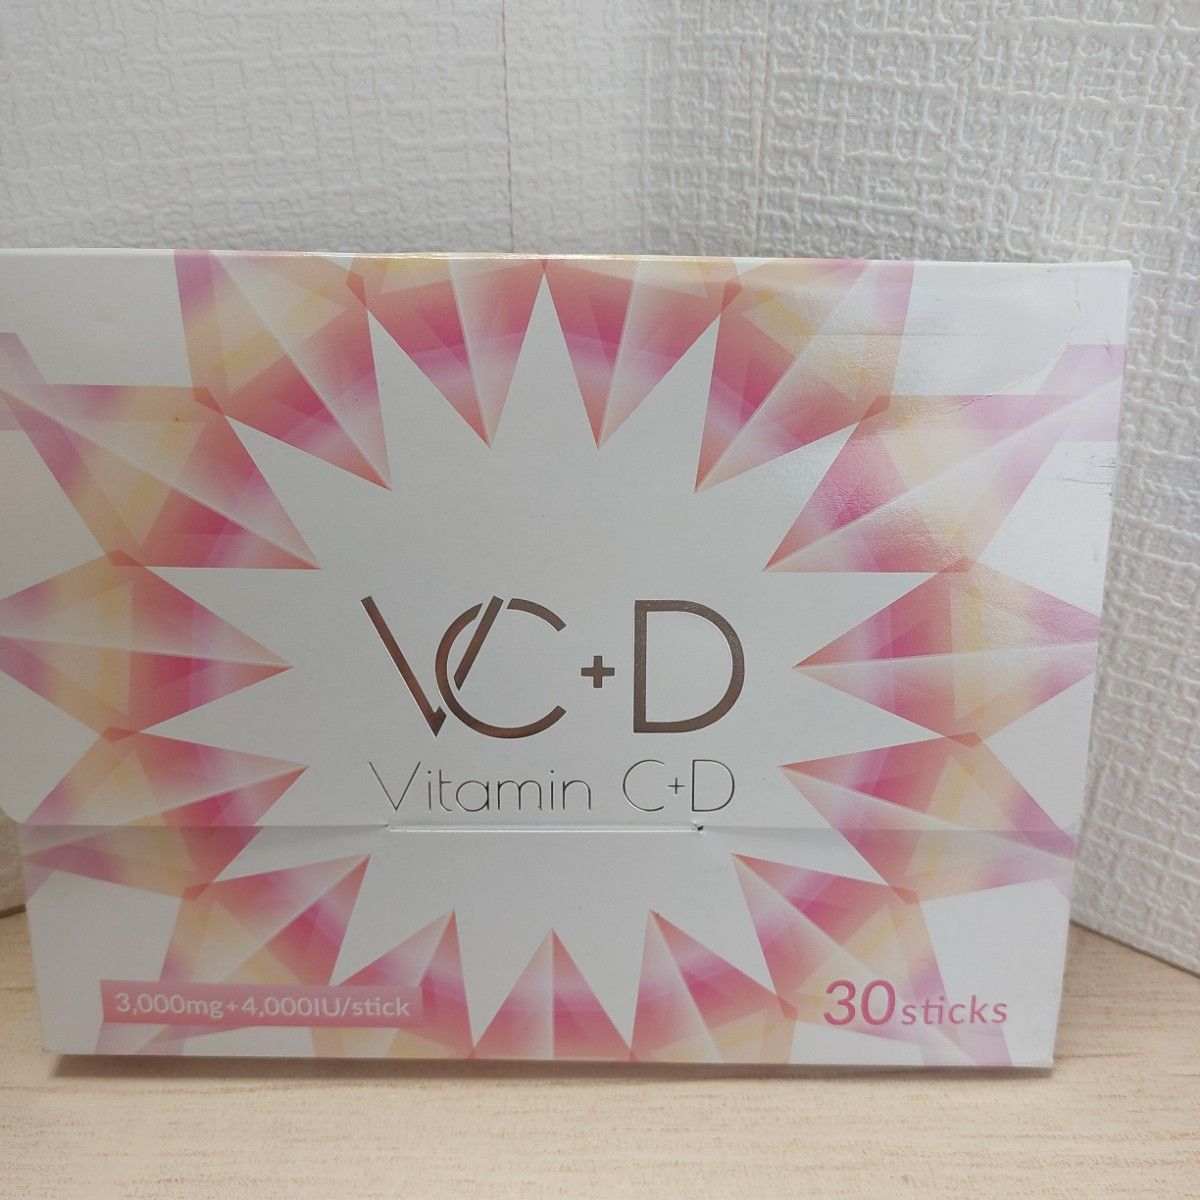 Vitamin C+D・低分子コラーゲンセット